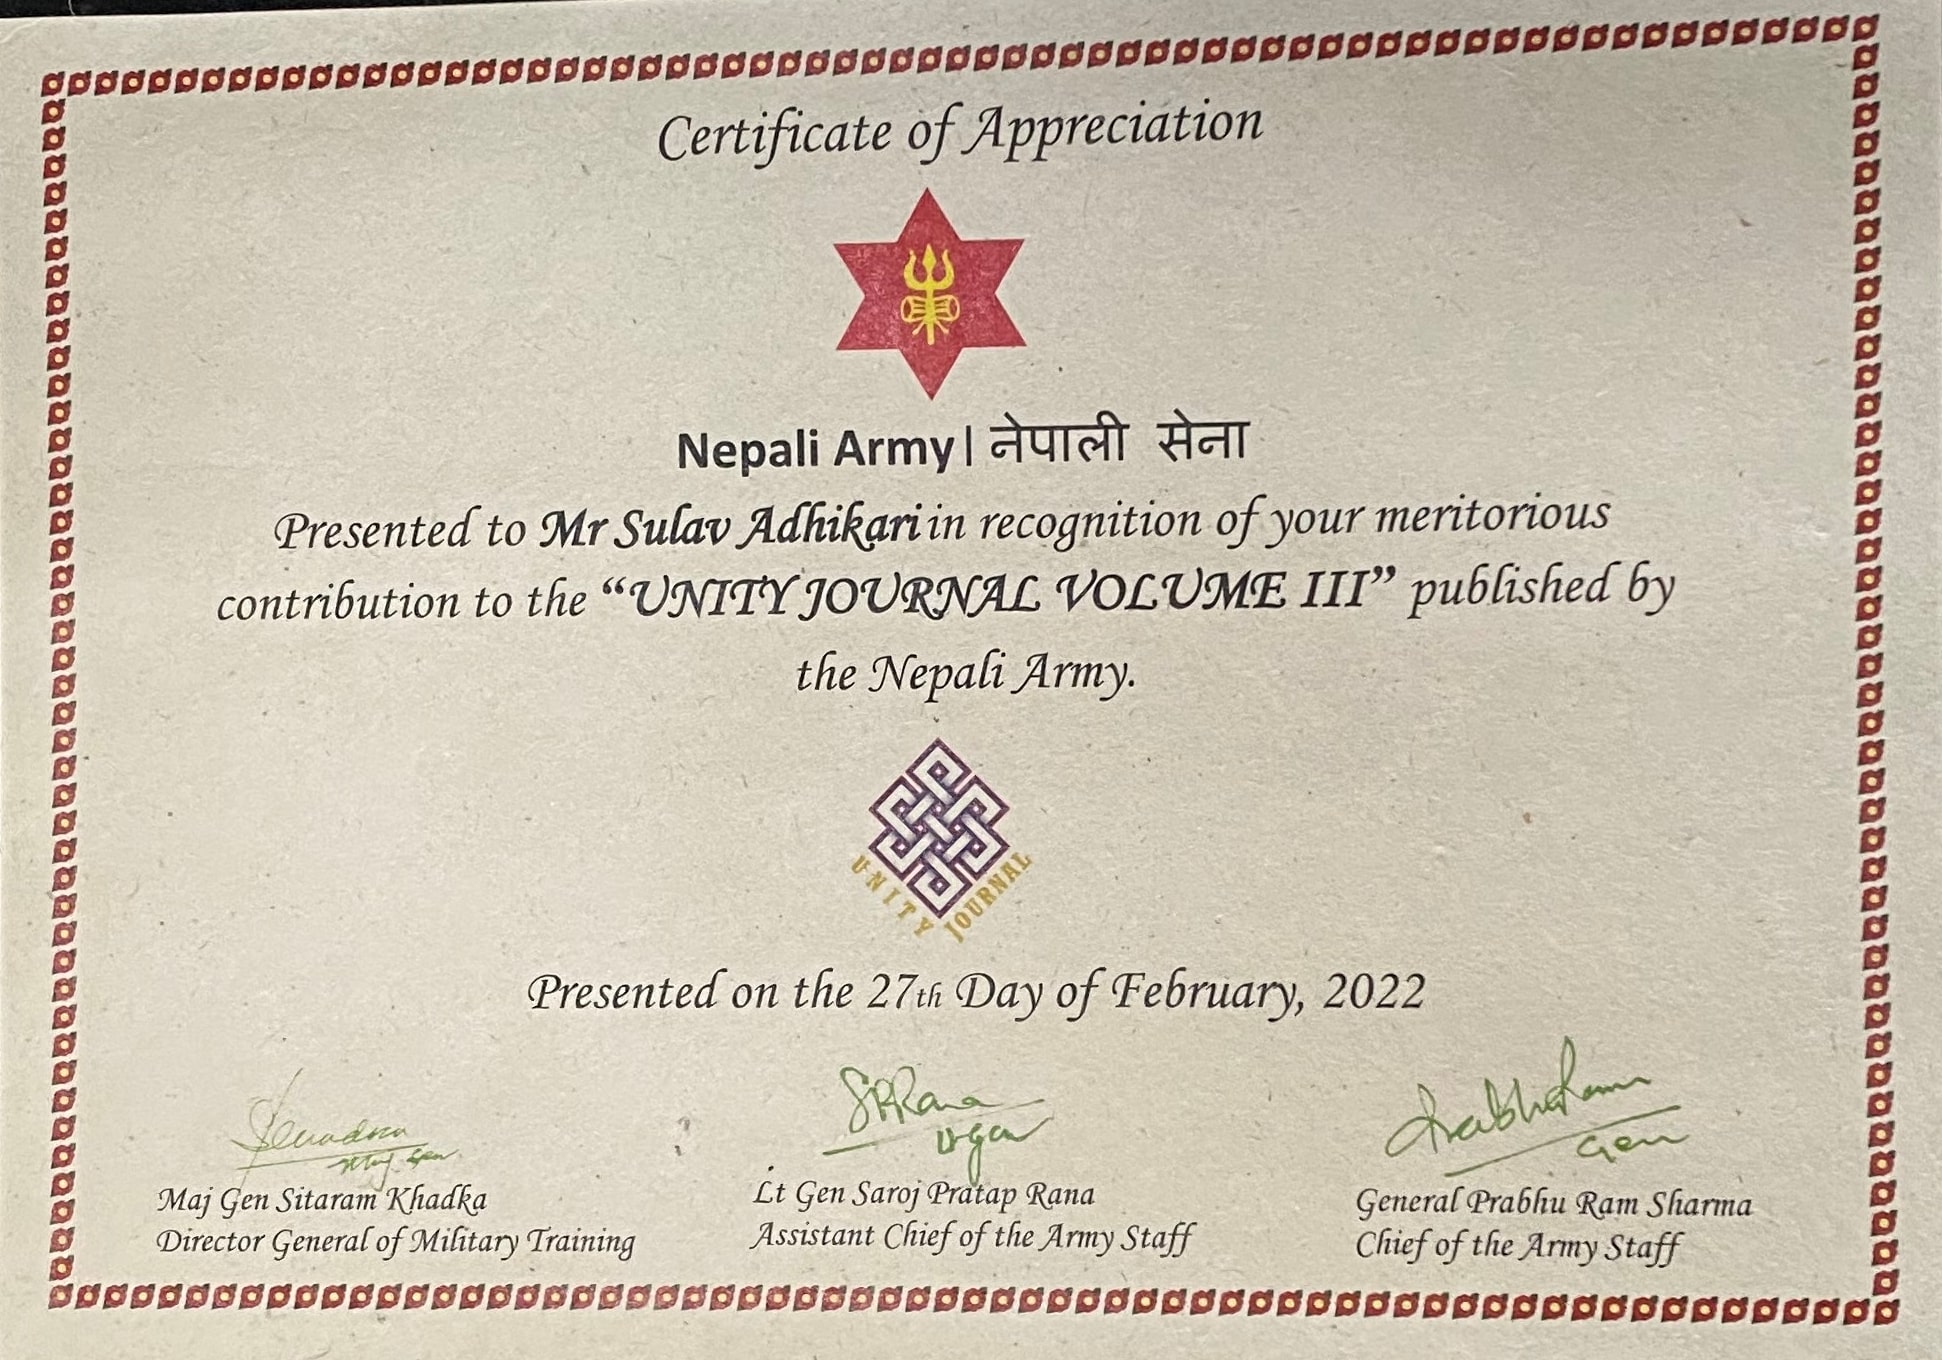 Unity Journal Publication Certificate of Appreciation